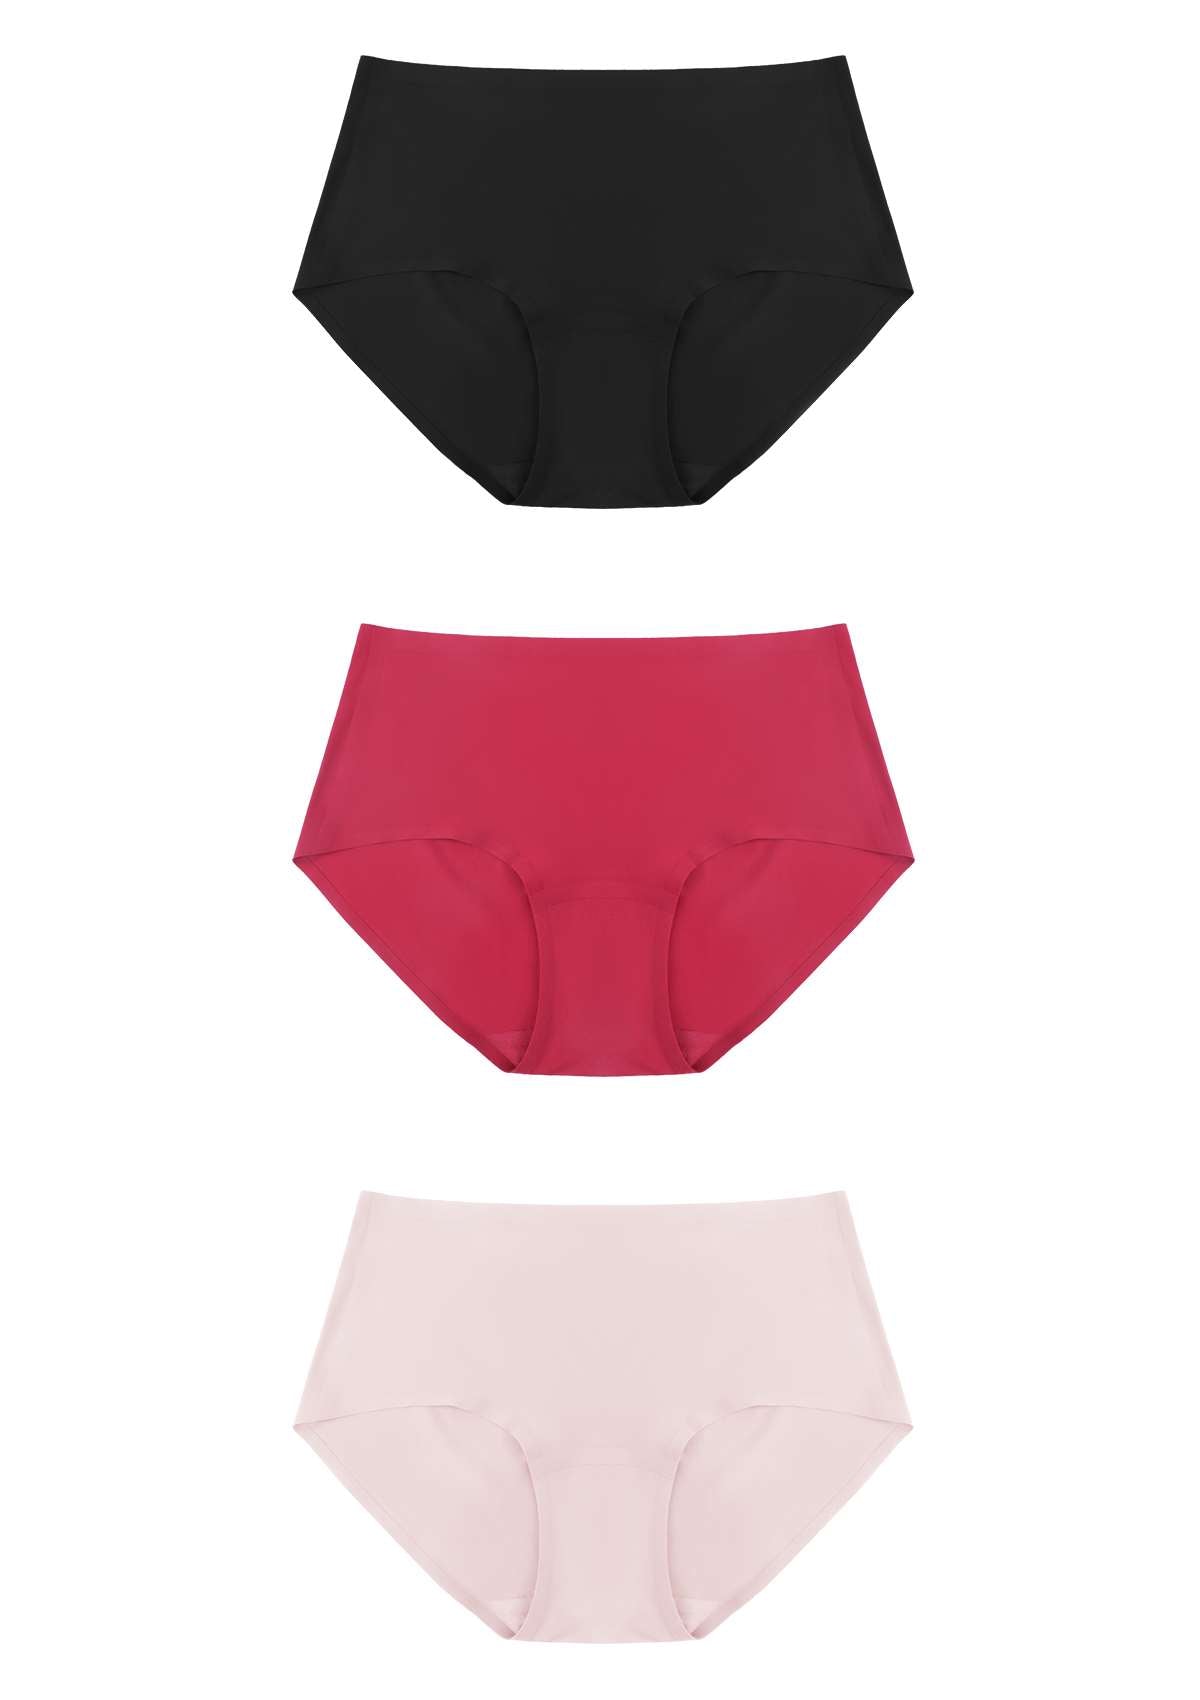 HSIA FlexiFit Soft Stretch Seamless Brief Underwear Bundle - 3 Packs/$15 / 2XL-4XL / Black+Red+Dusty Rose